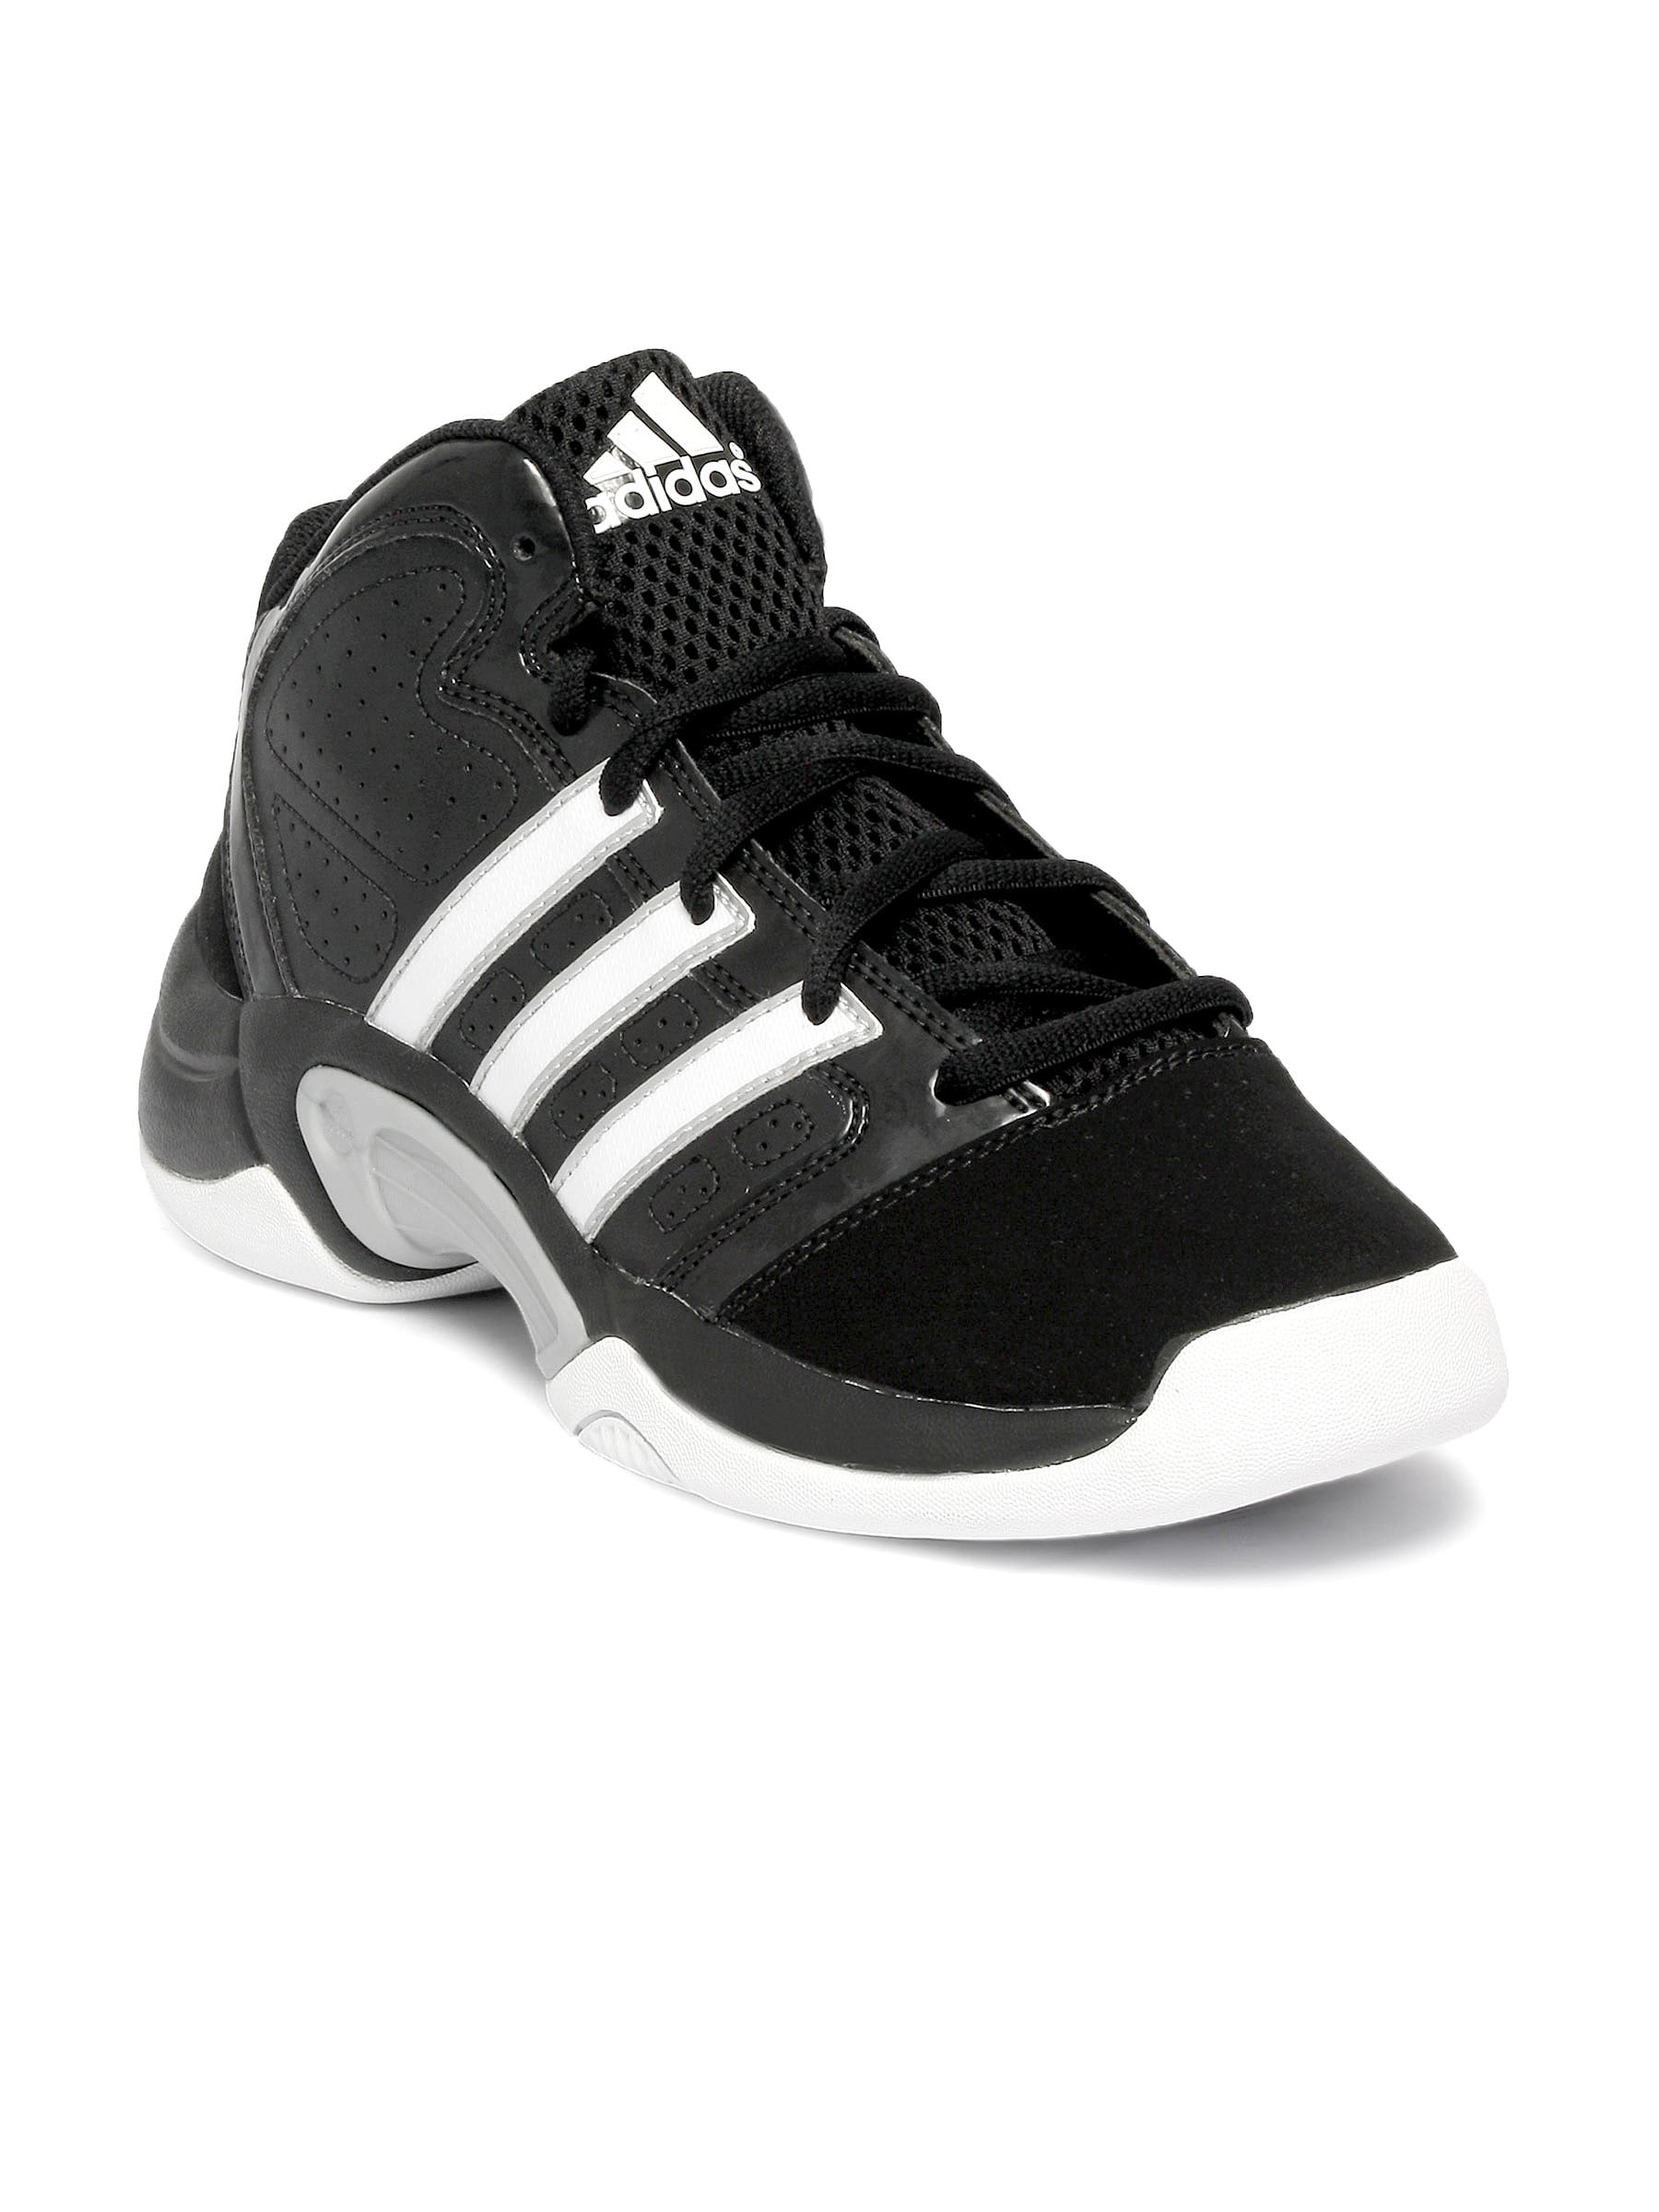 ADIDAS Black Tip Off 2 Sports Shoe